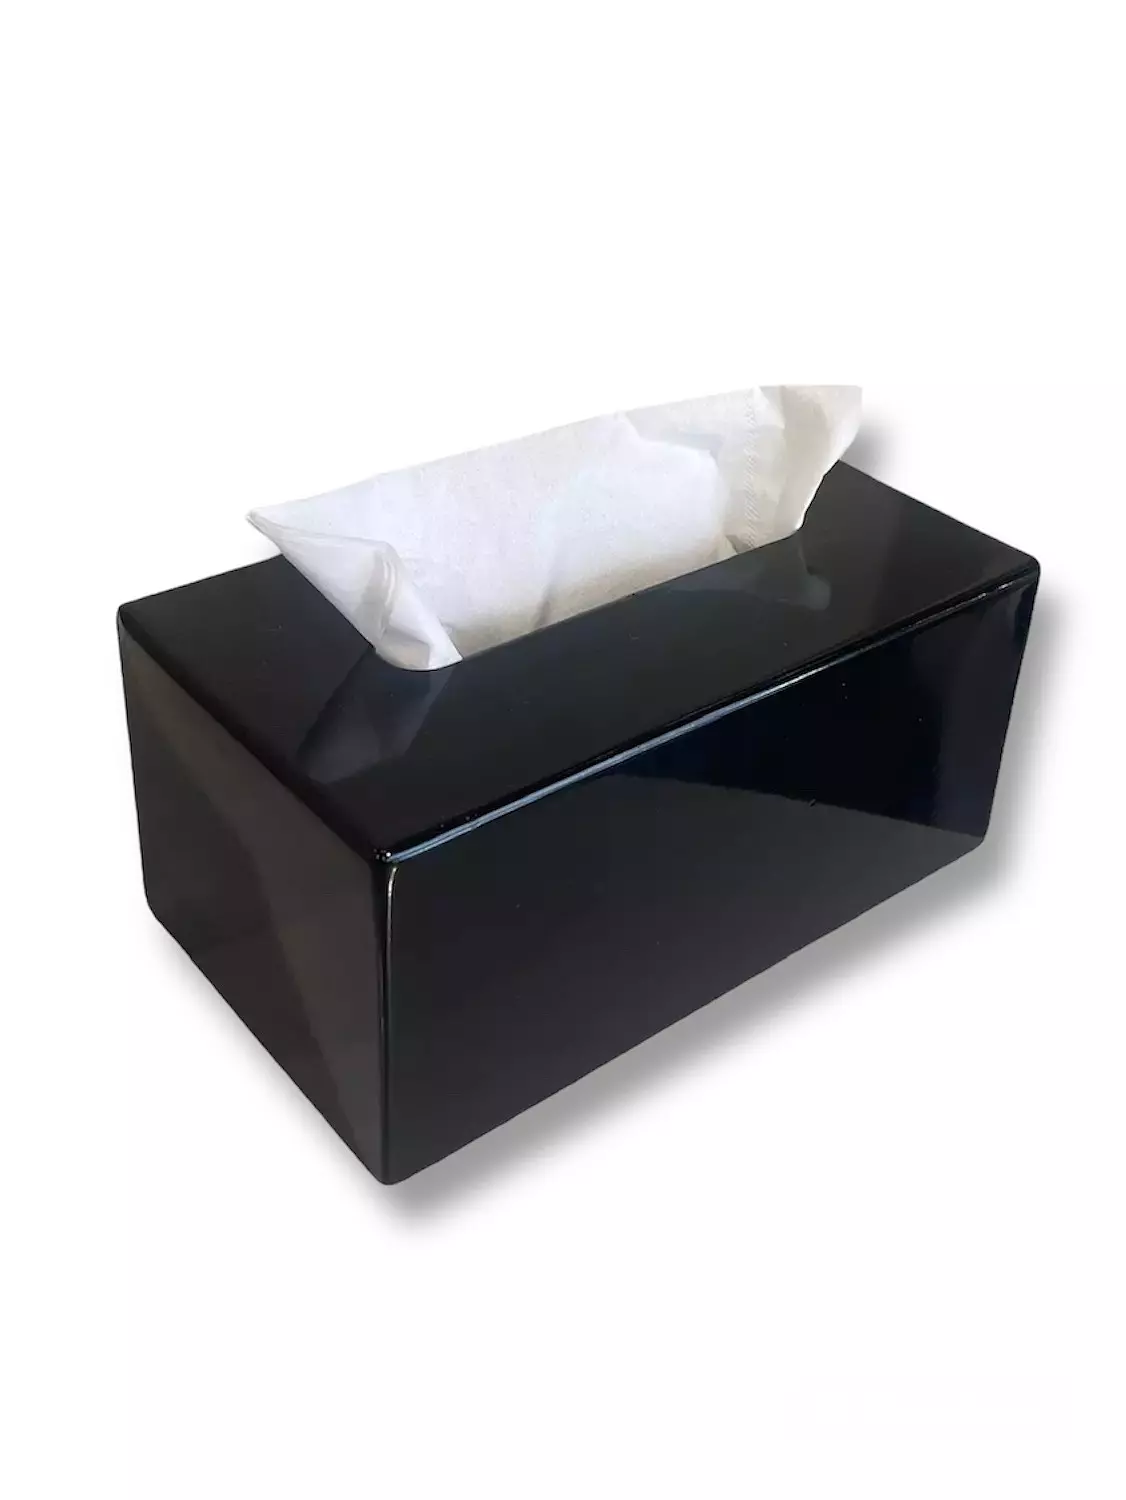 Tissue box 0